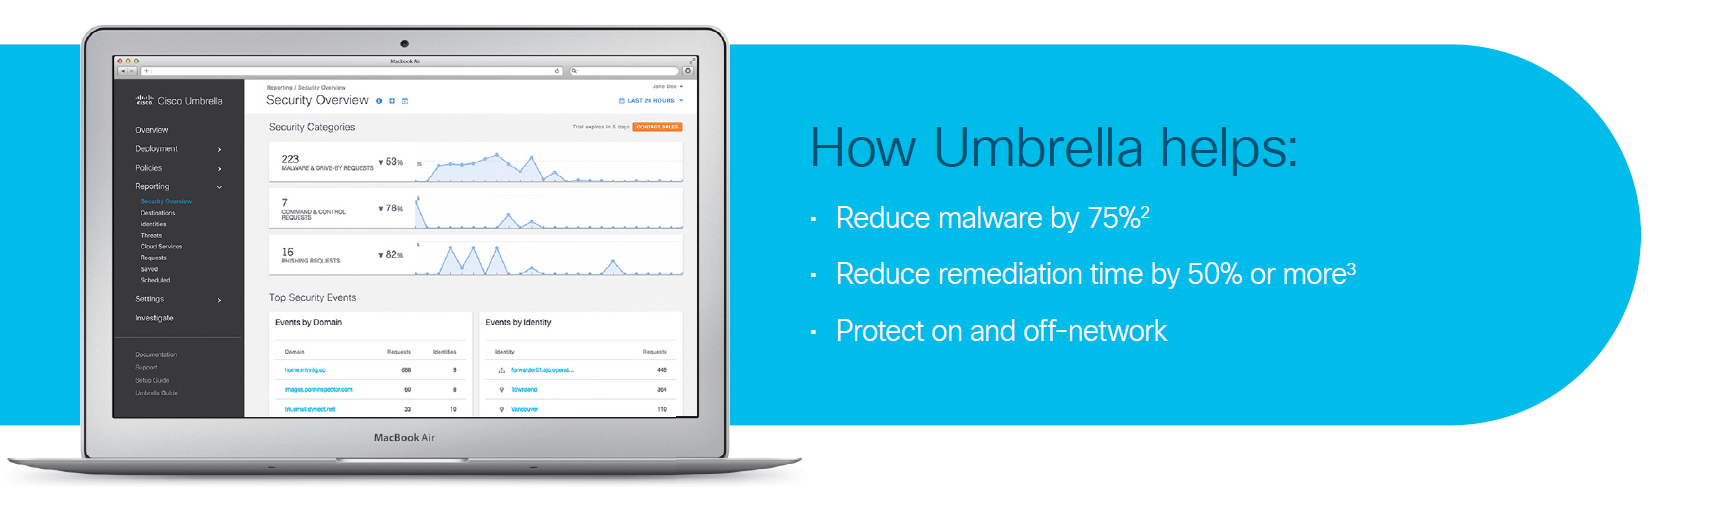 Umbrella - Reduce Malware